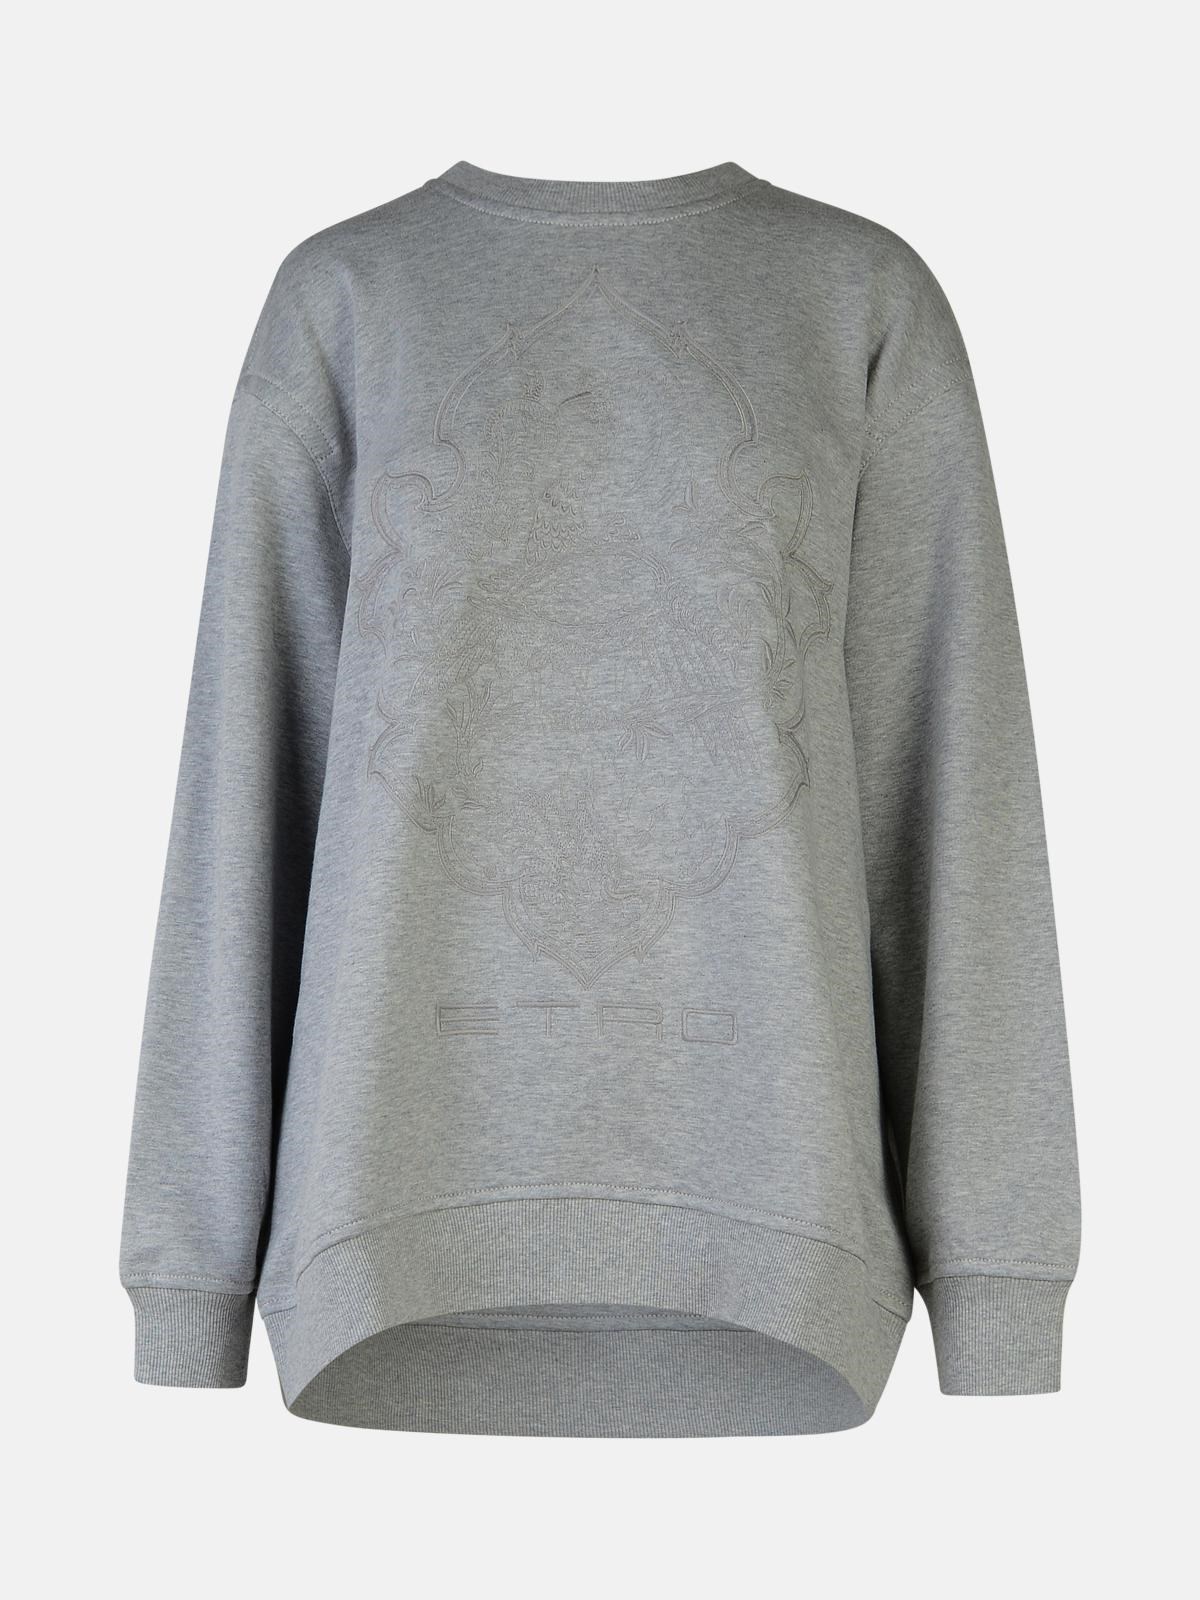 Etro Gray Cotton Sweatshirt